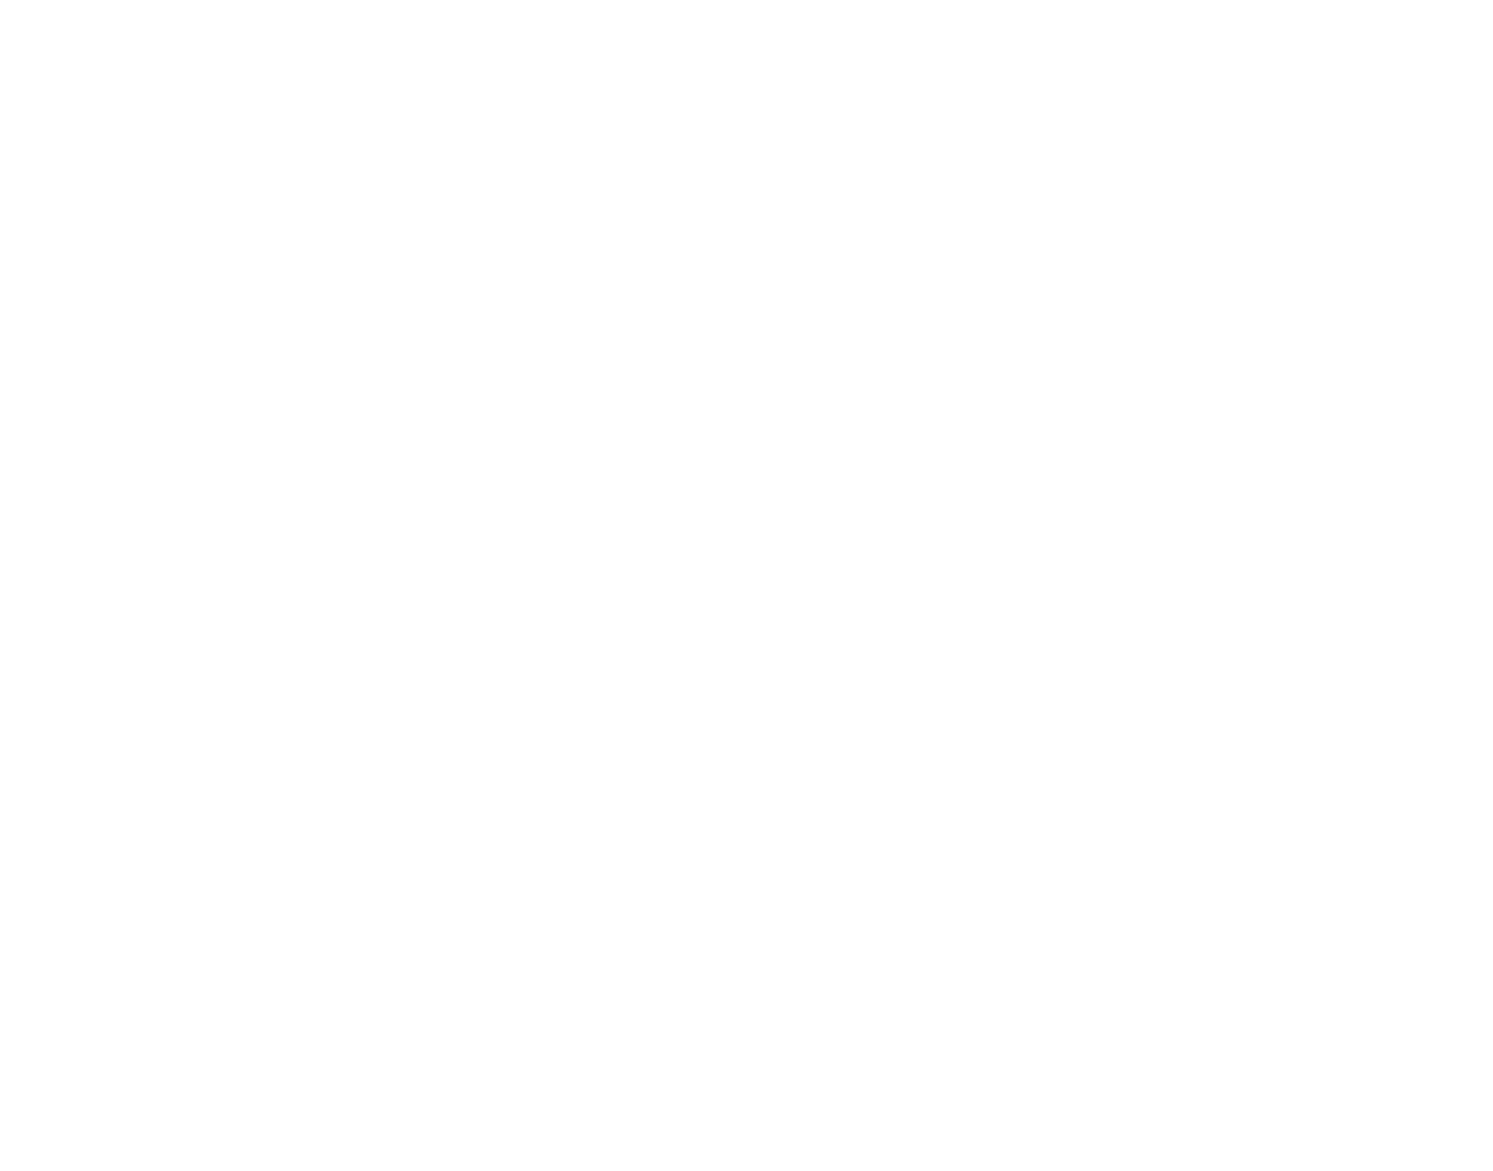 Trash is Truth